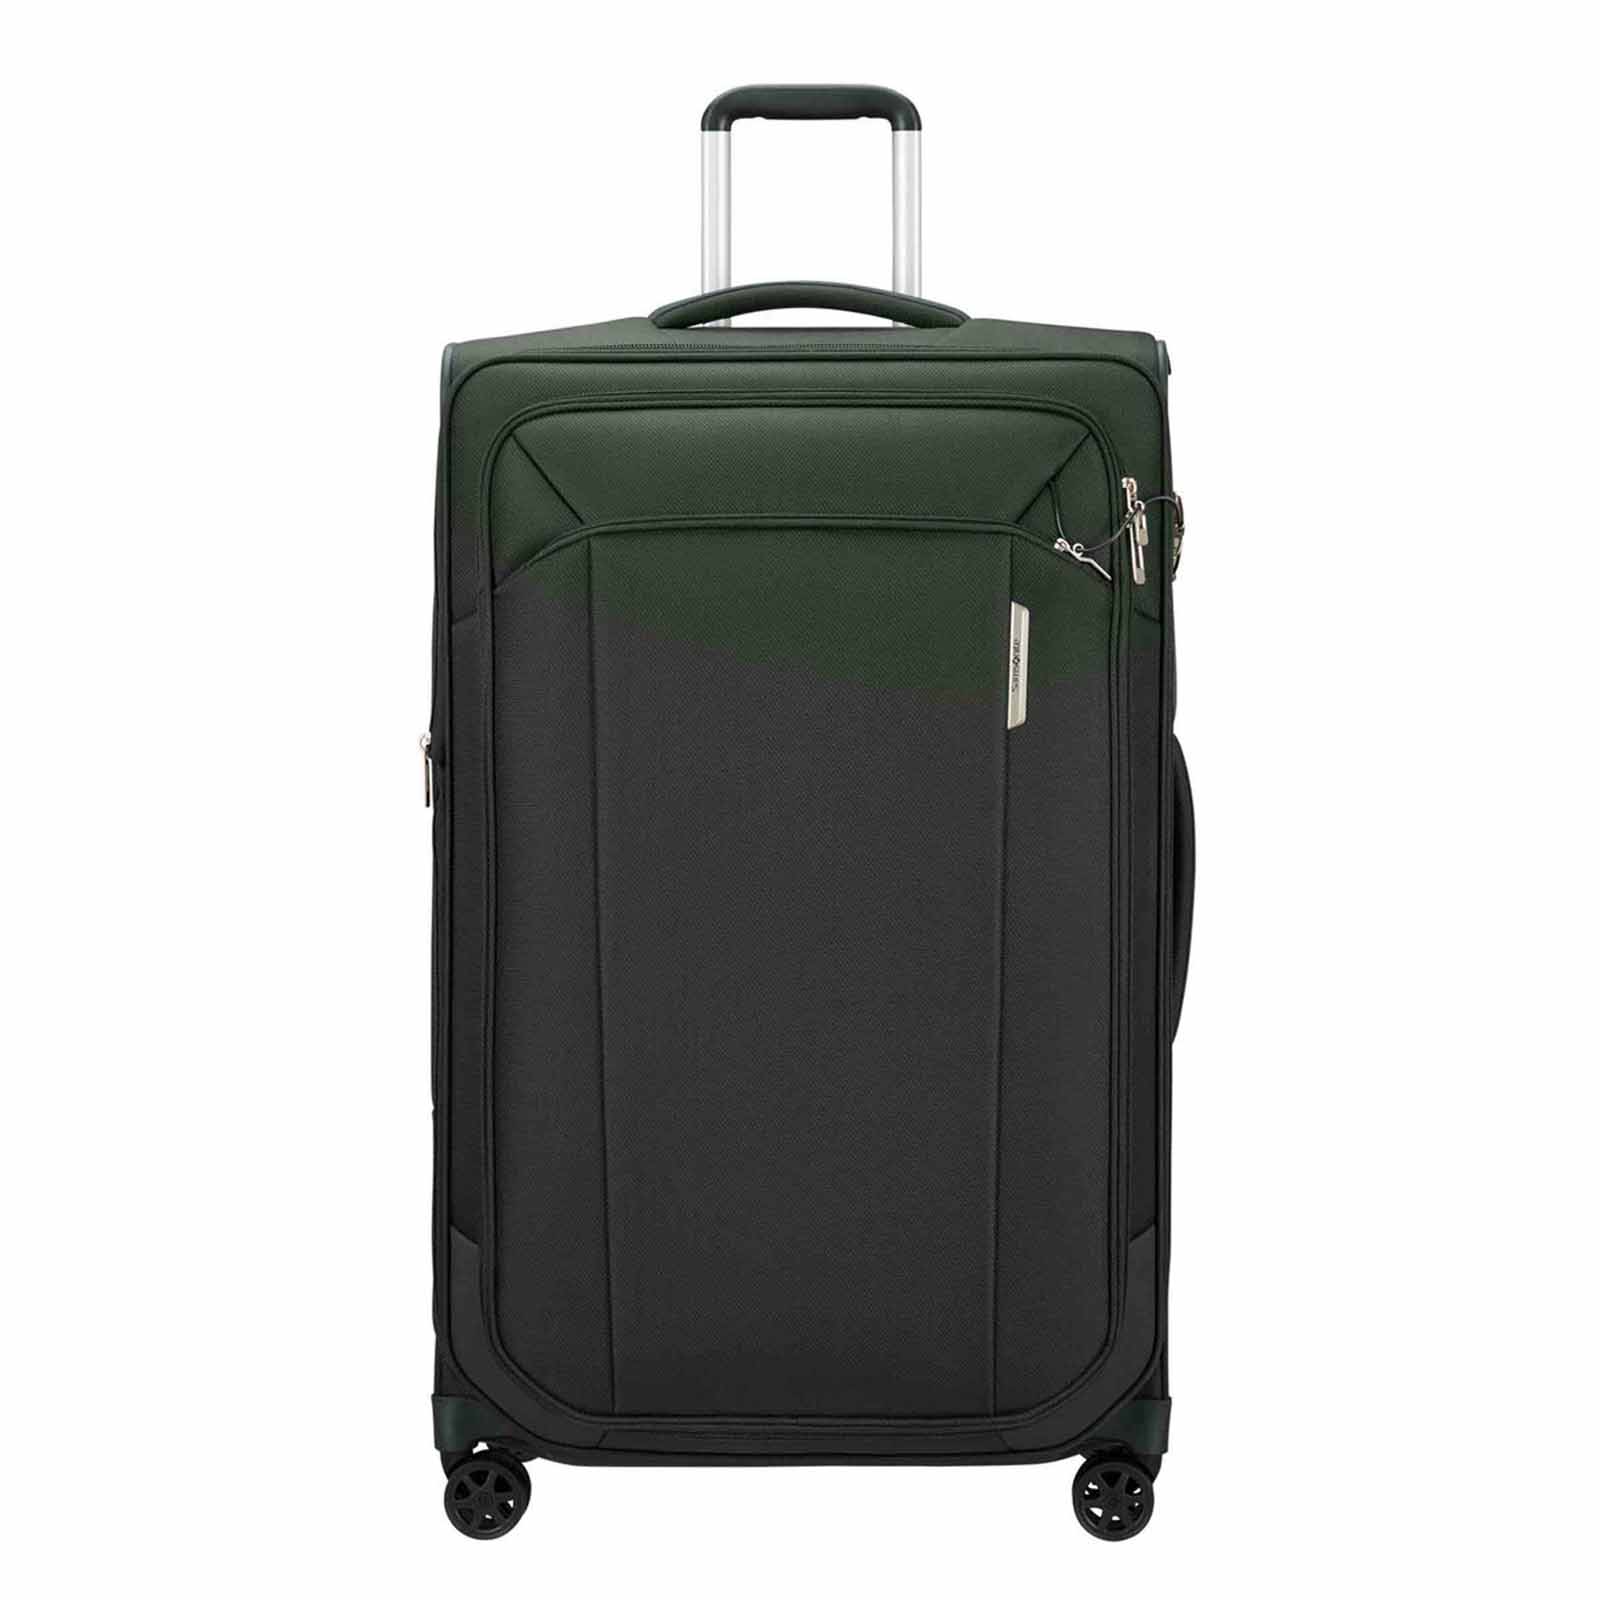 Samsonite-Respark-78cm-Suitcase-Forest-Green-Front